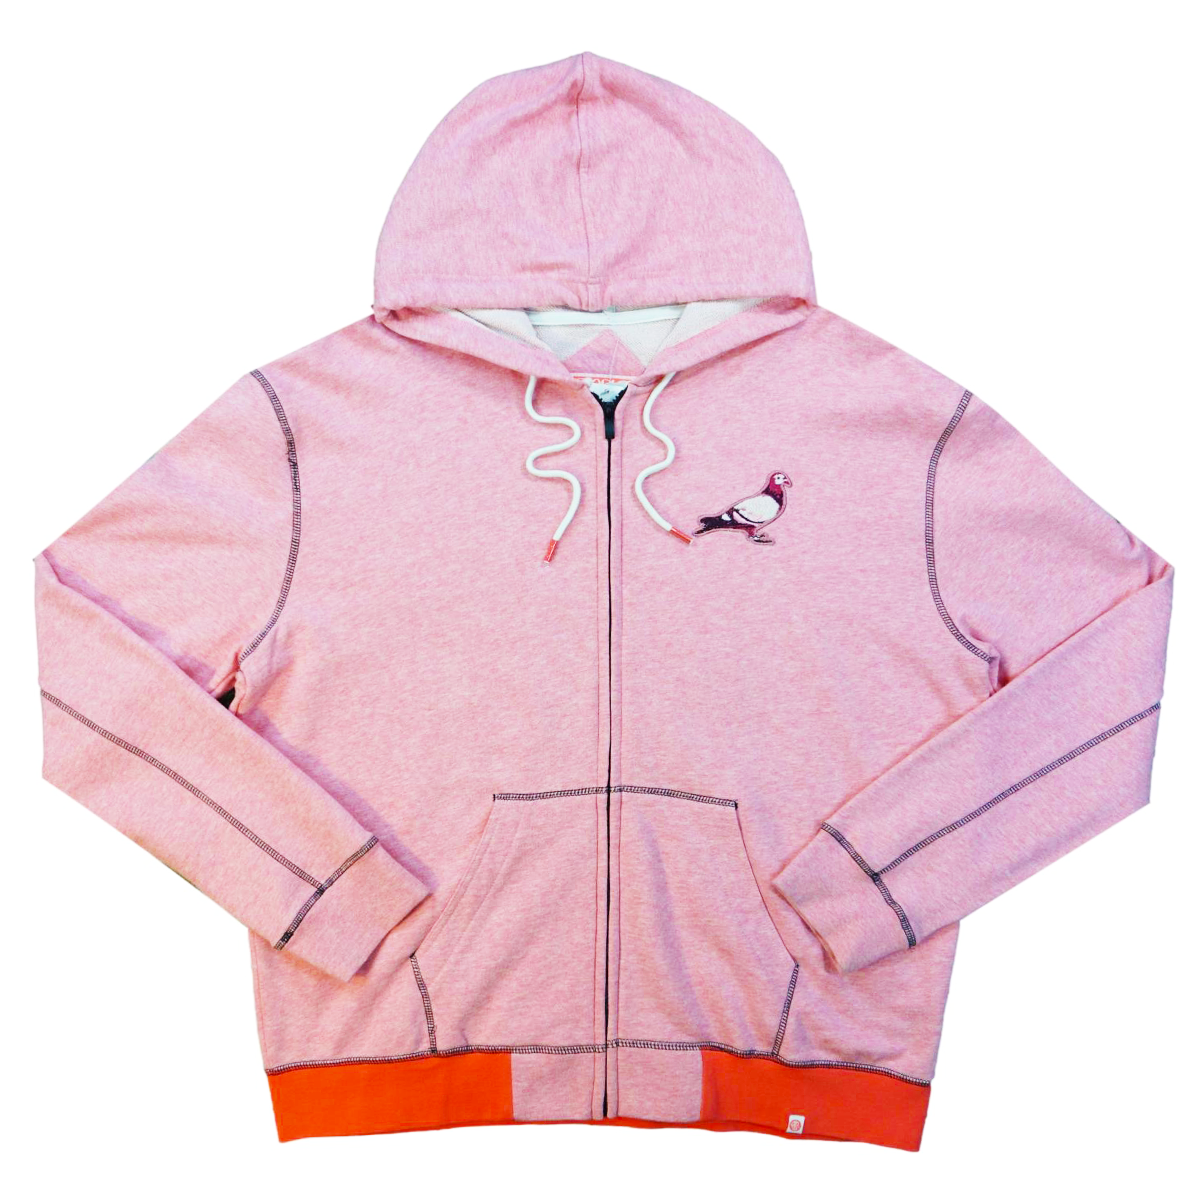 Staple- Pigeon Jacket (Heather Grey/Pink)